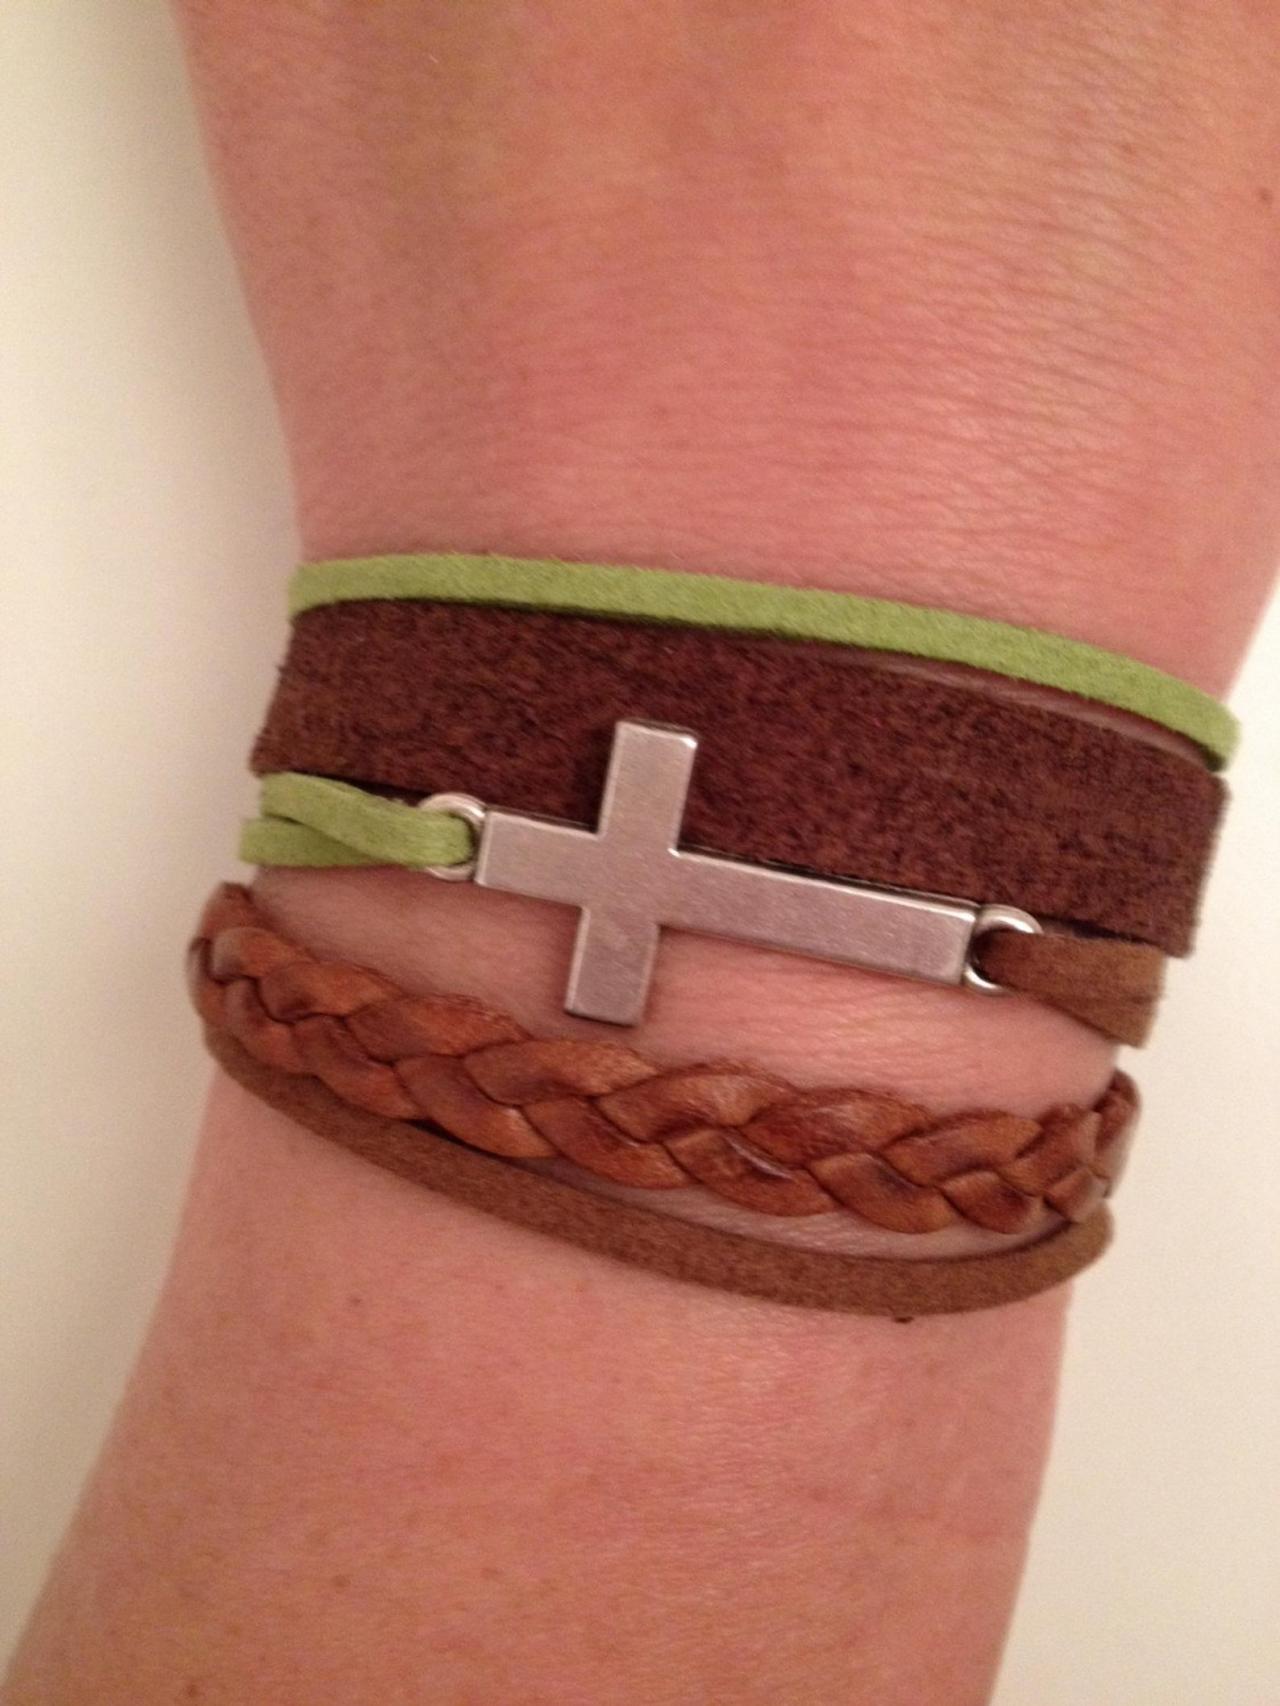 Cross Leather Bracelet 21 - faith friendship cuff cross bracelet brown green leather braid gift adjustable current womenswear unique